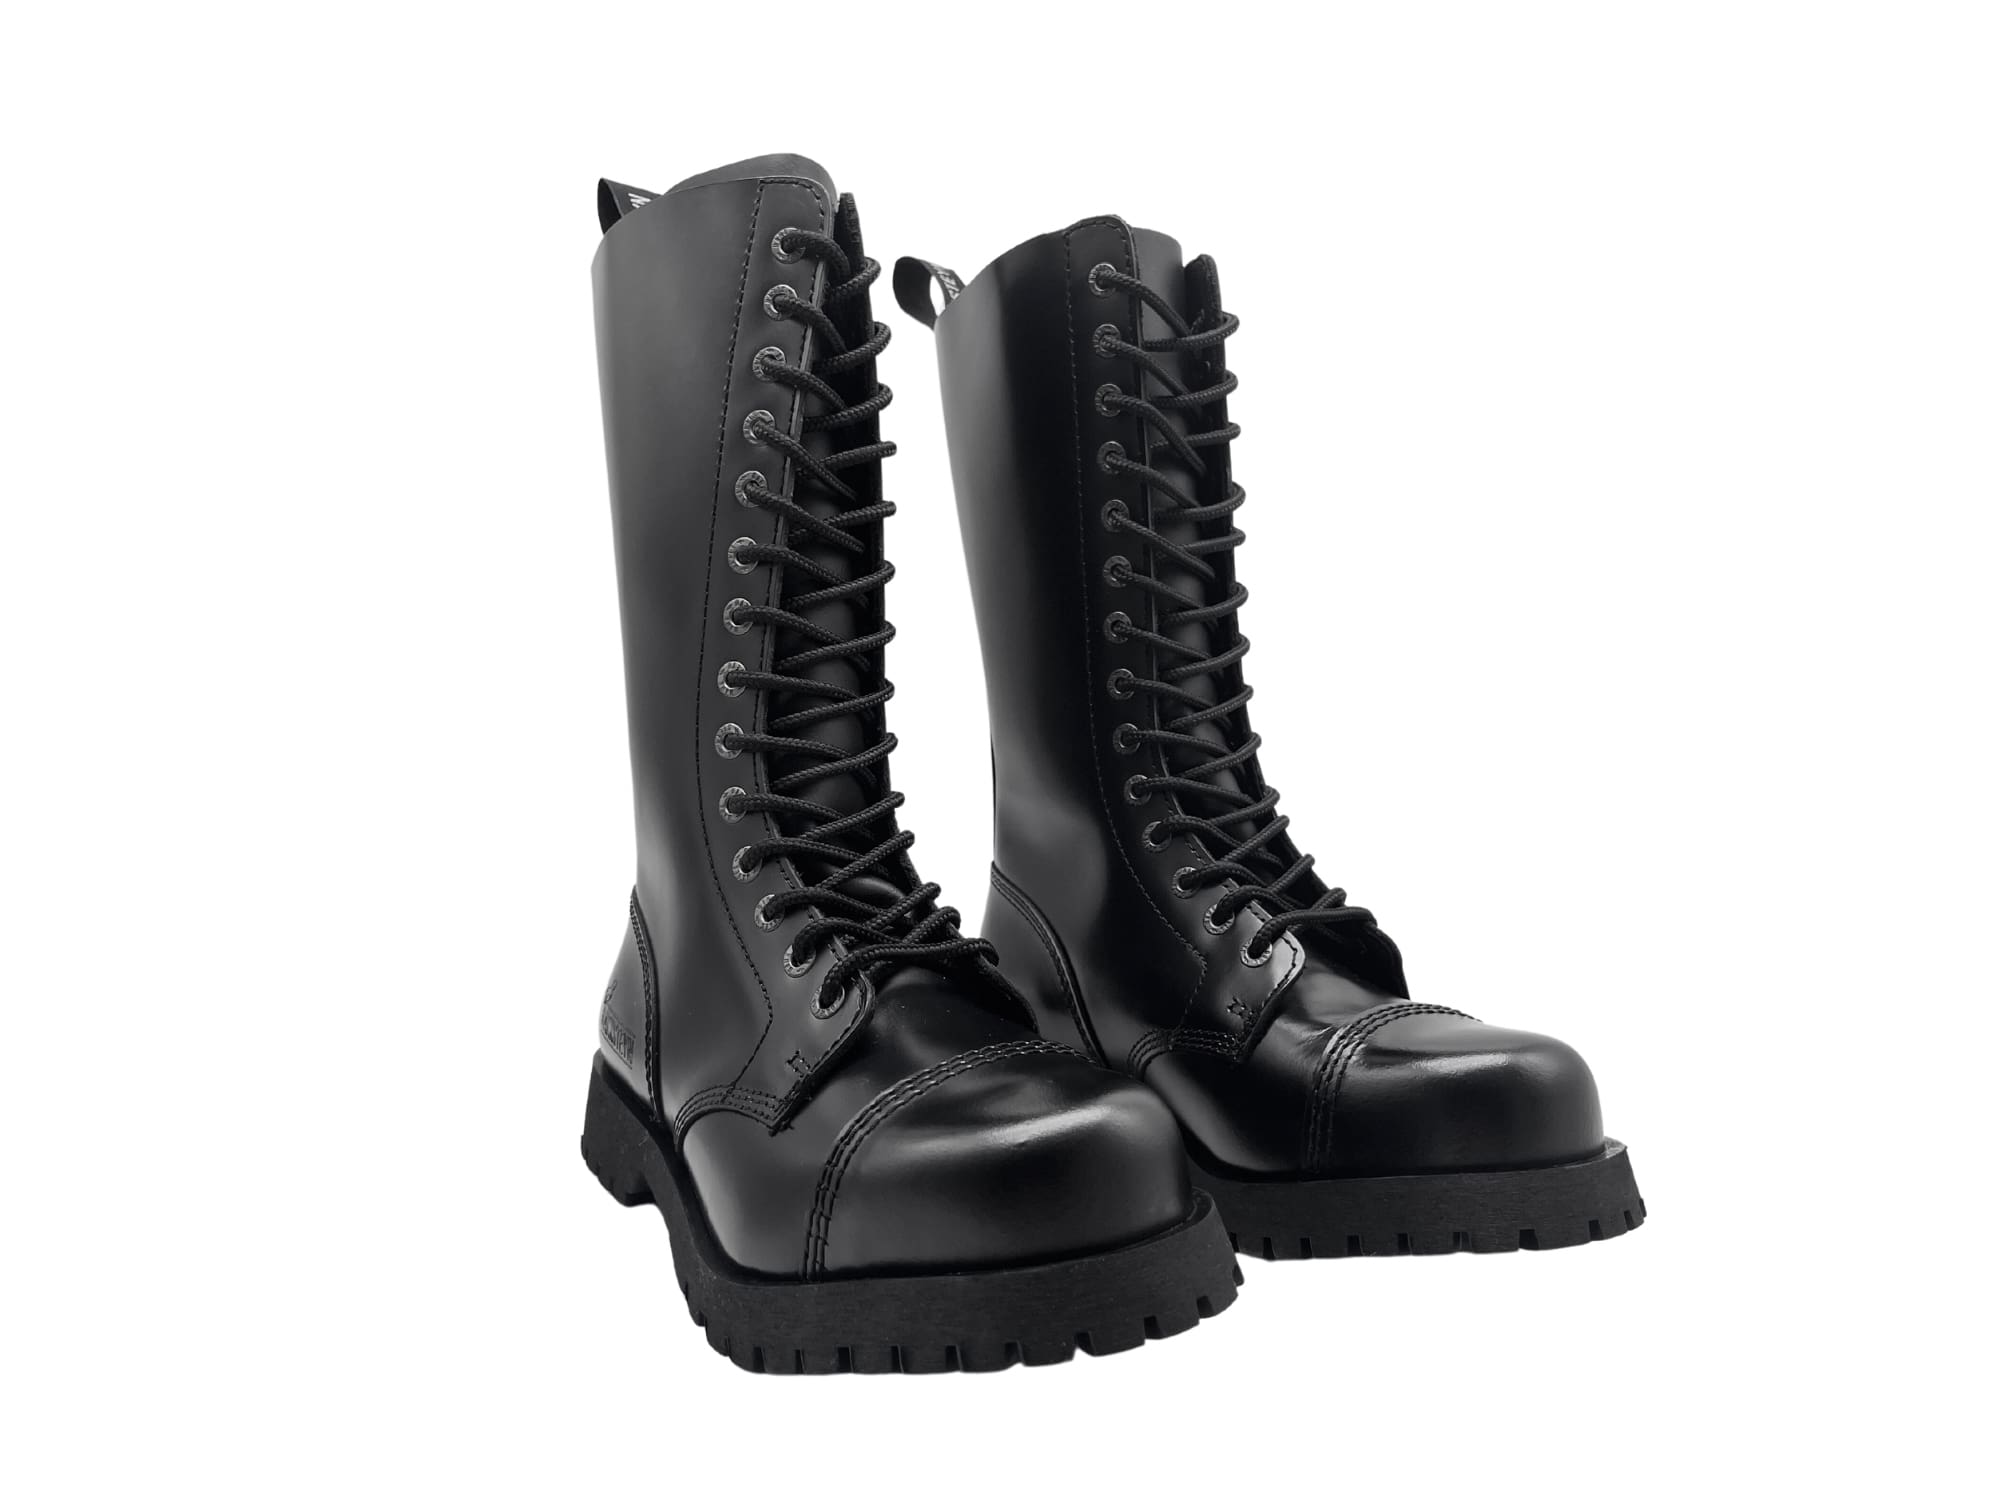 Darksteyn Shoes 14 Eye Ranger Premium Boots Black